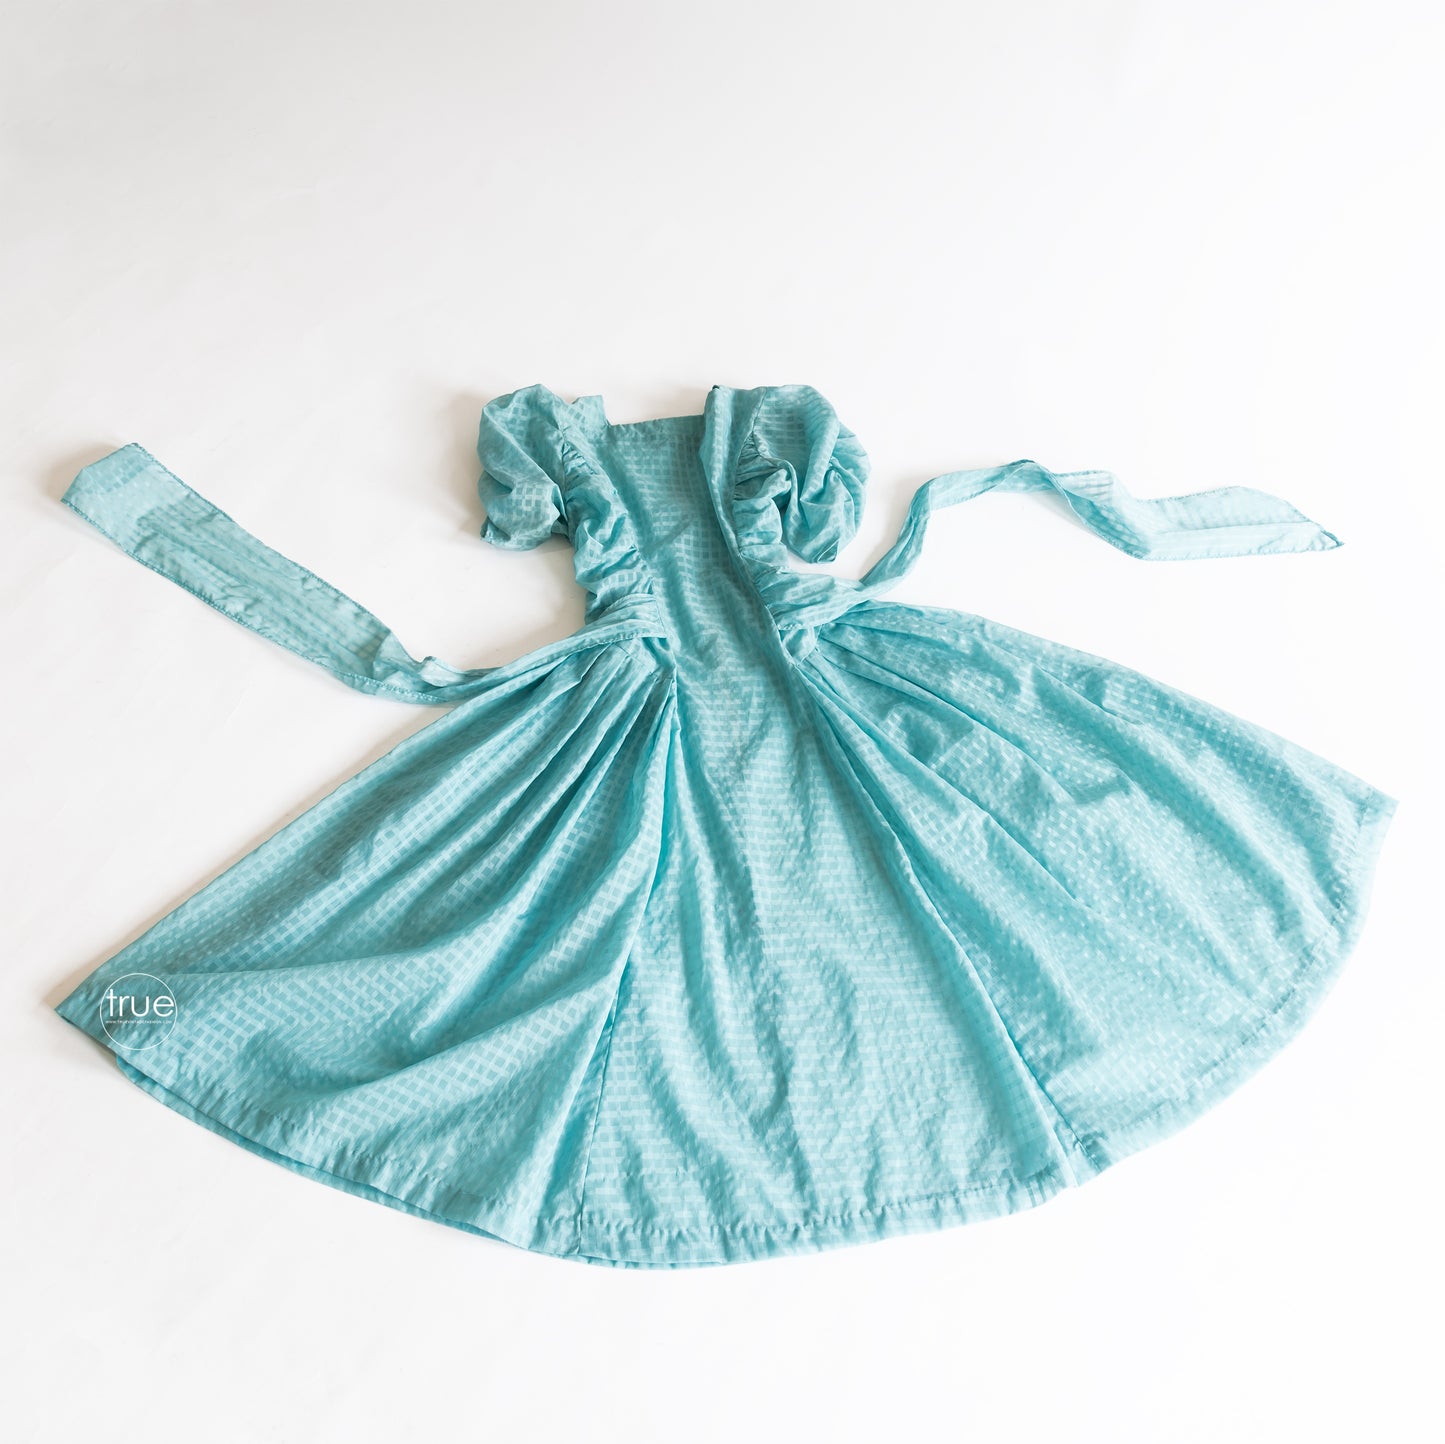 vintage 1940's dress ...sheer delight robins' egg blue window pane lattice weave ruched dress